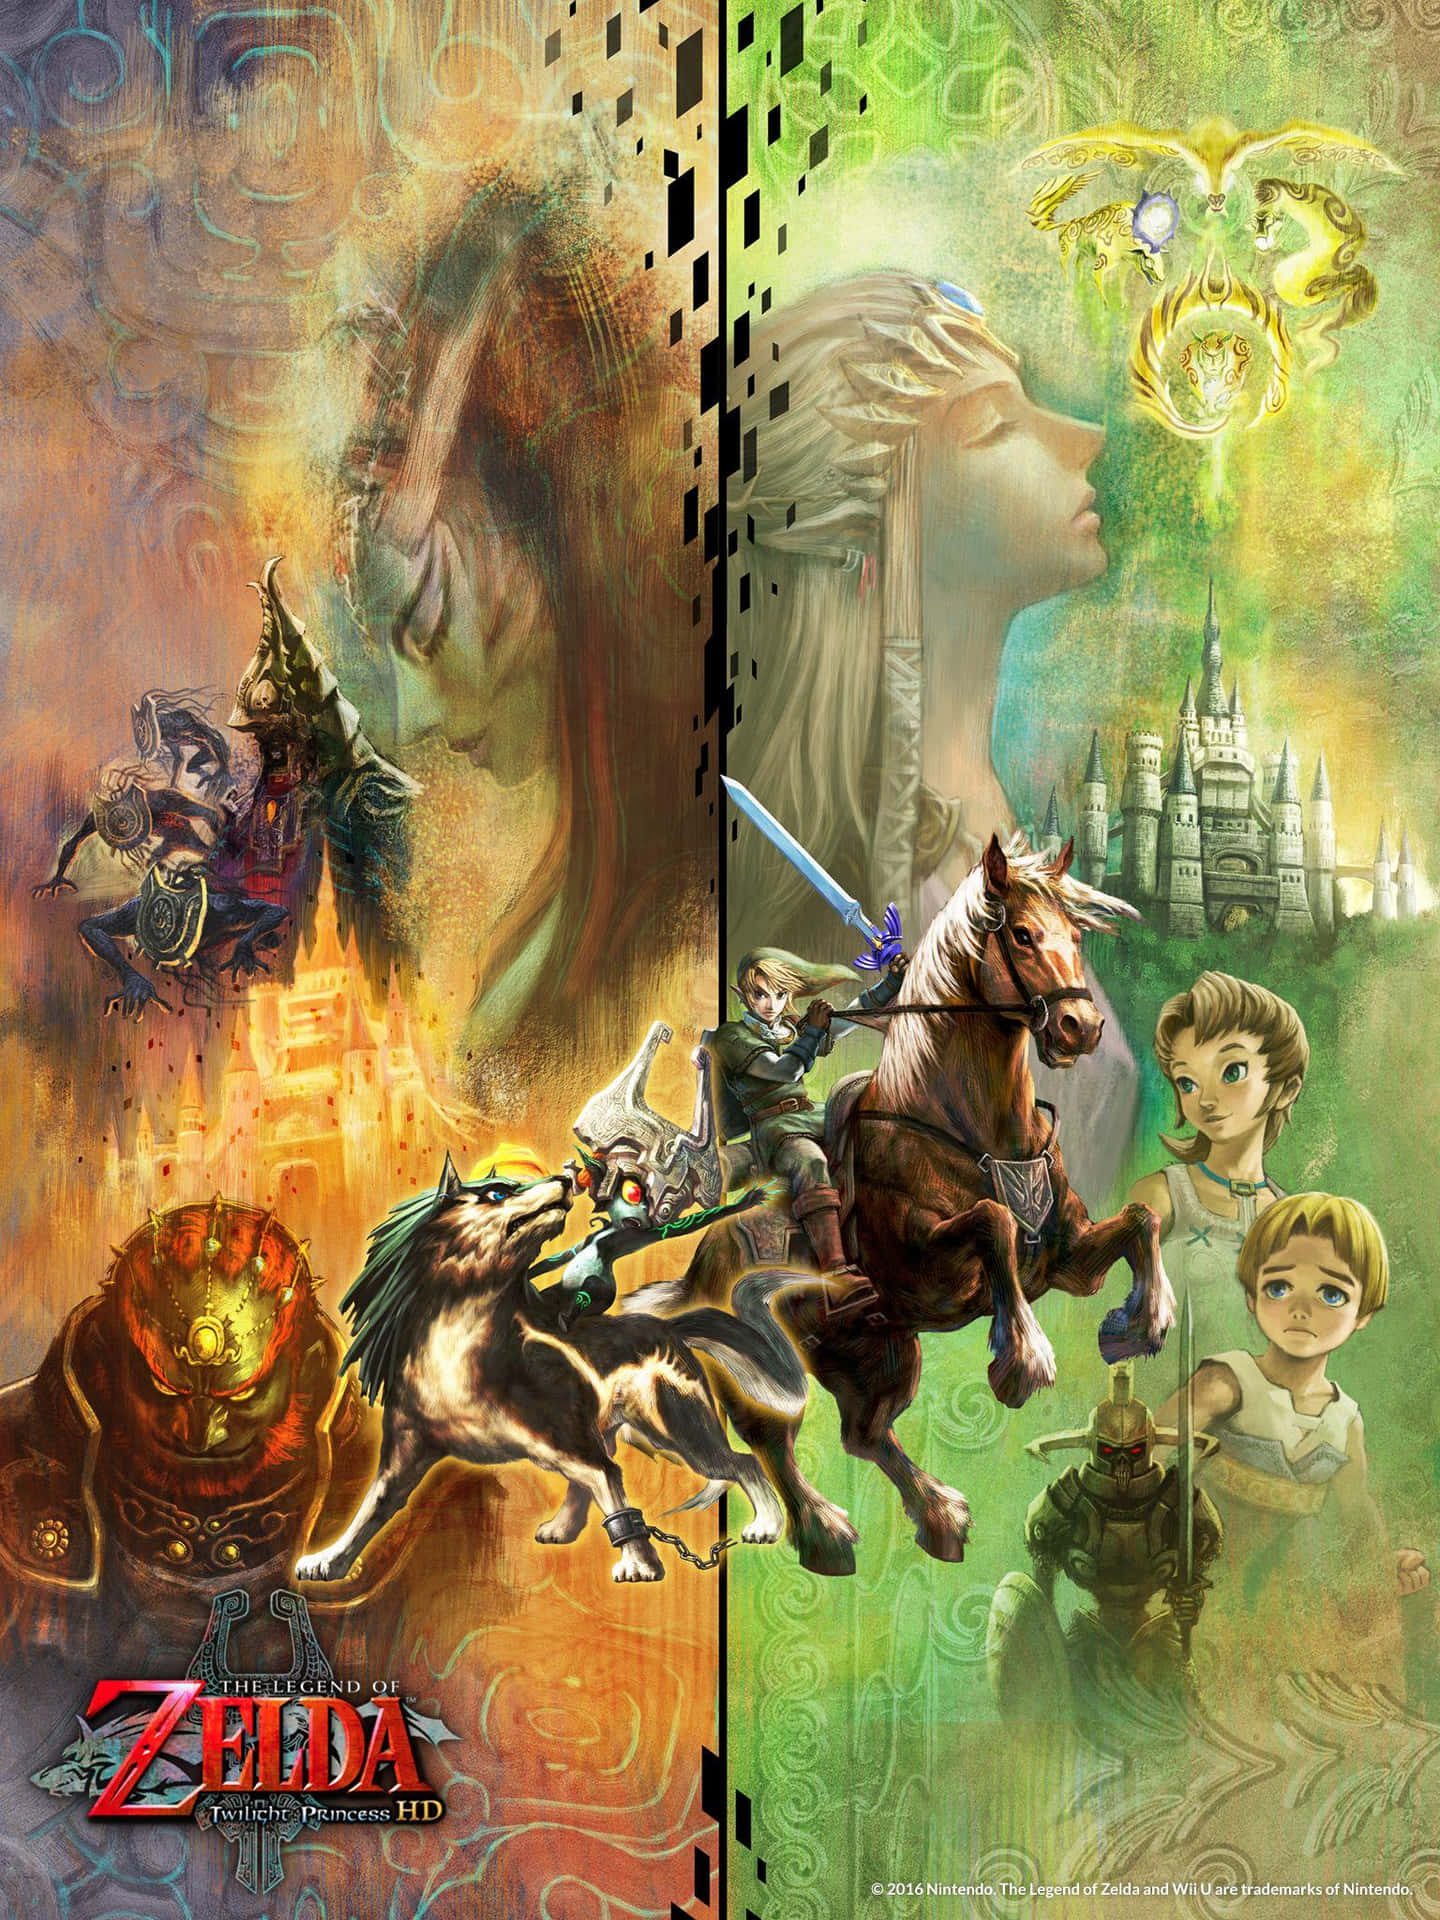 Link's Adventure Through Hyrule in Twilight Princess Wallpaper